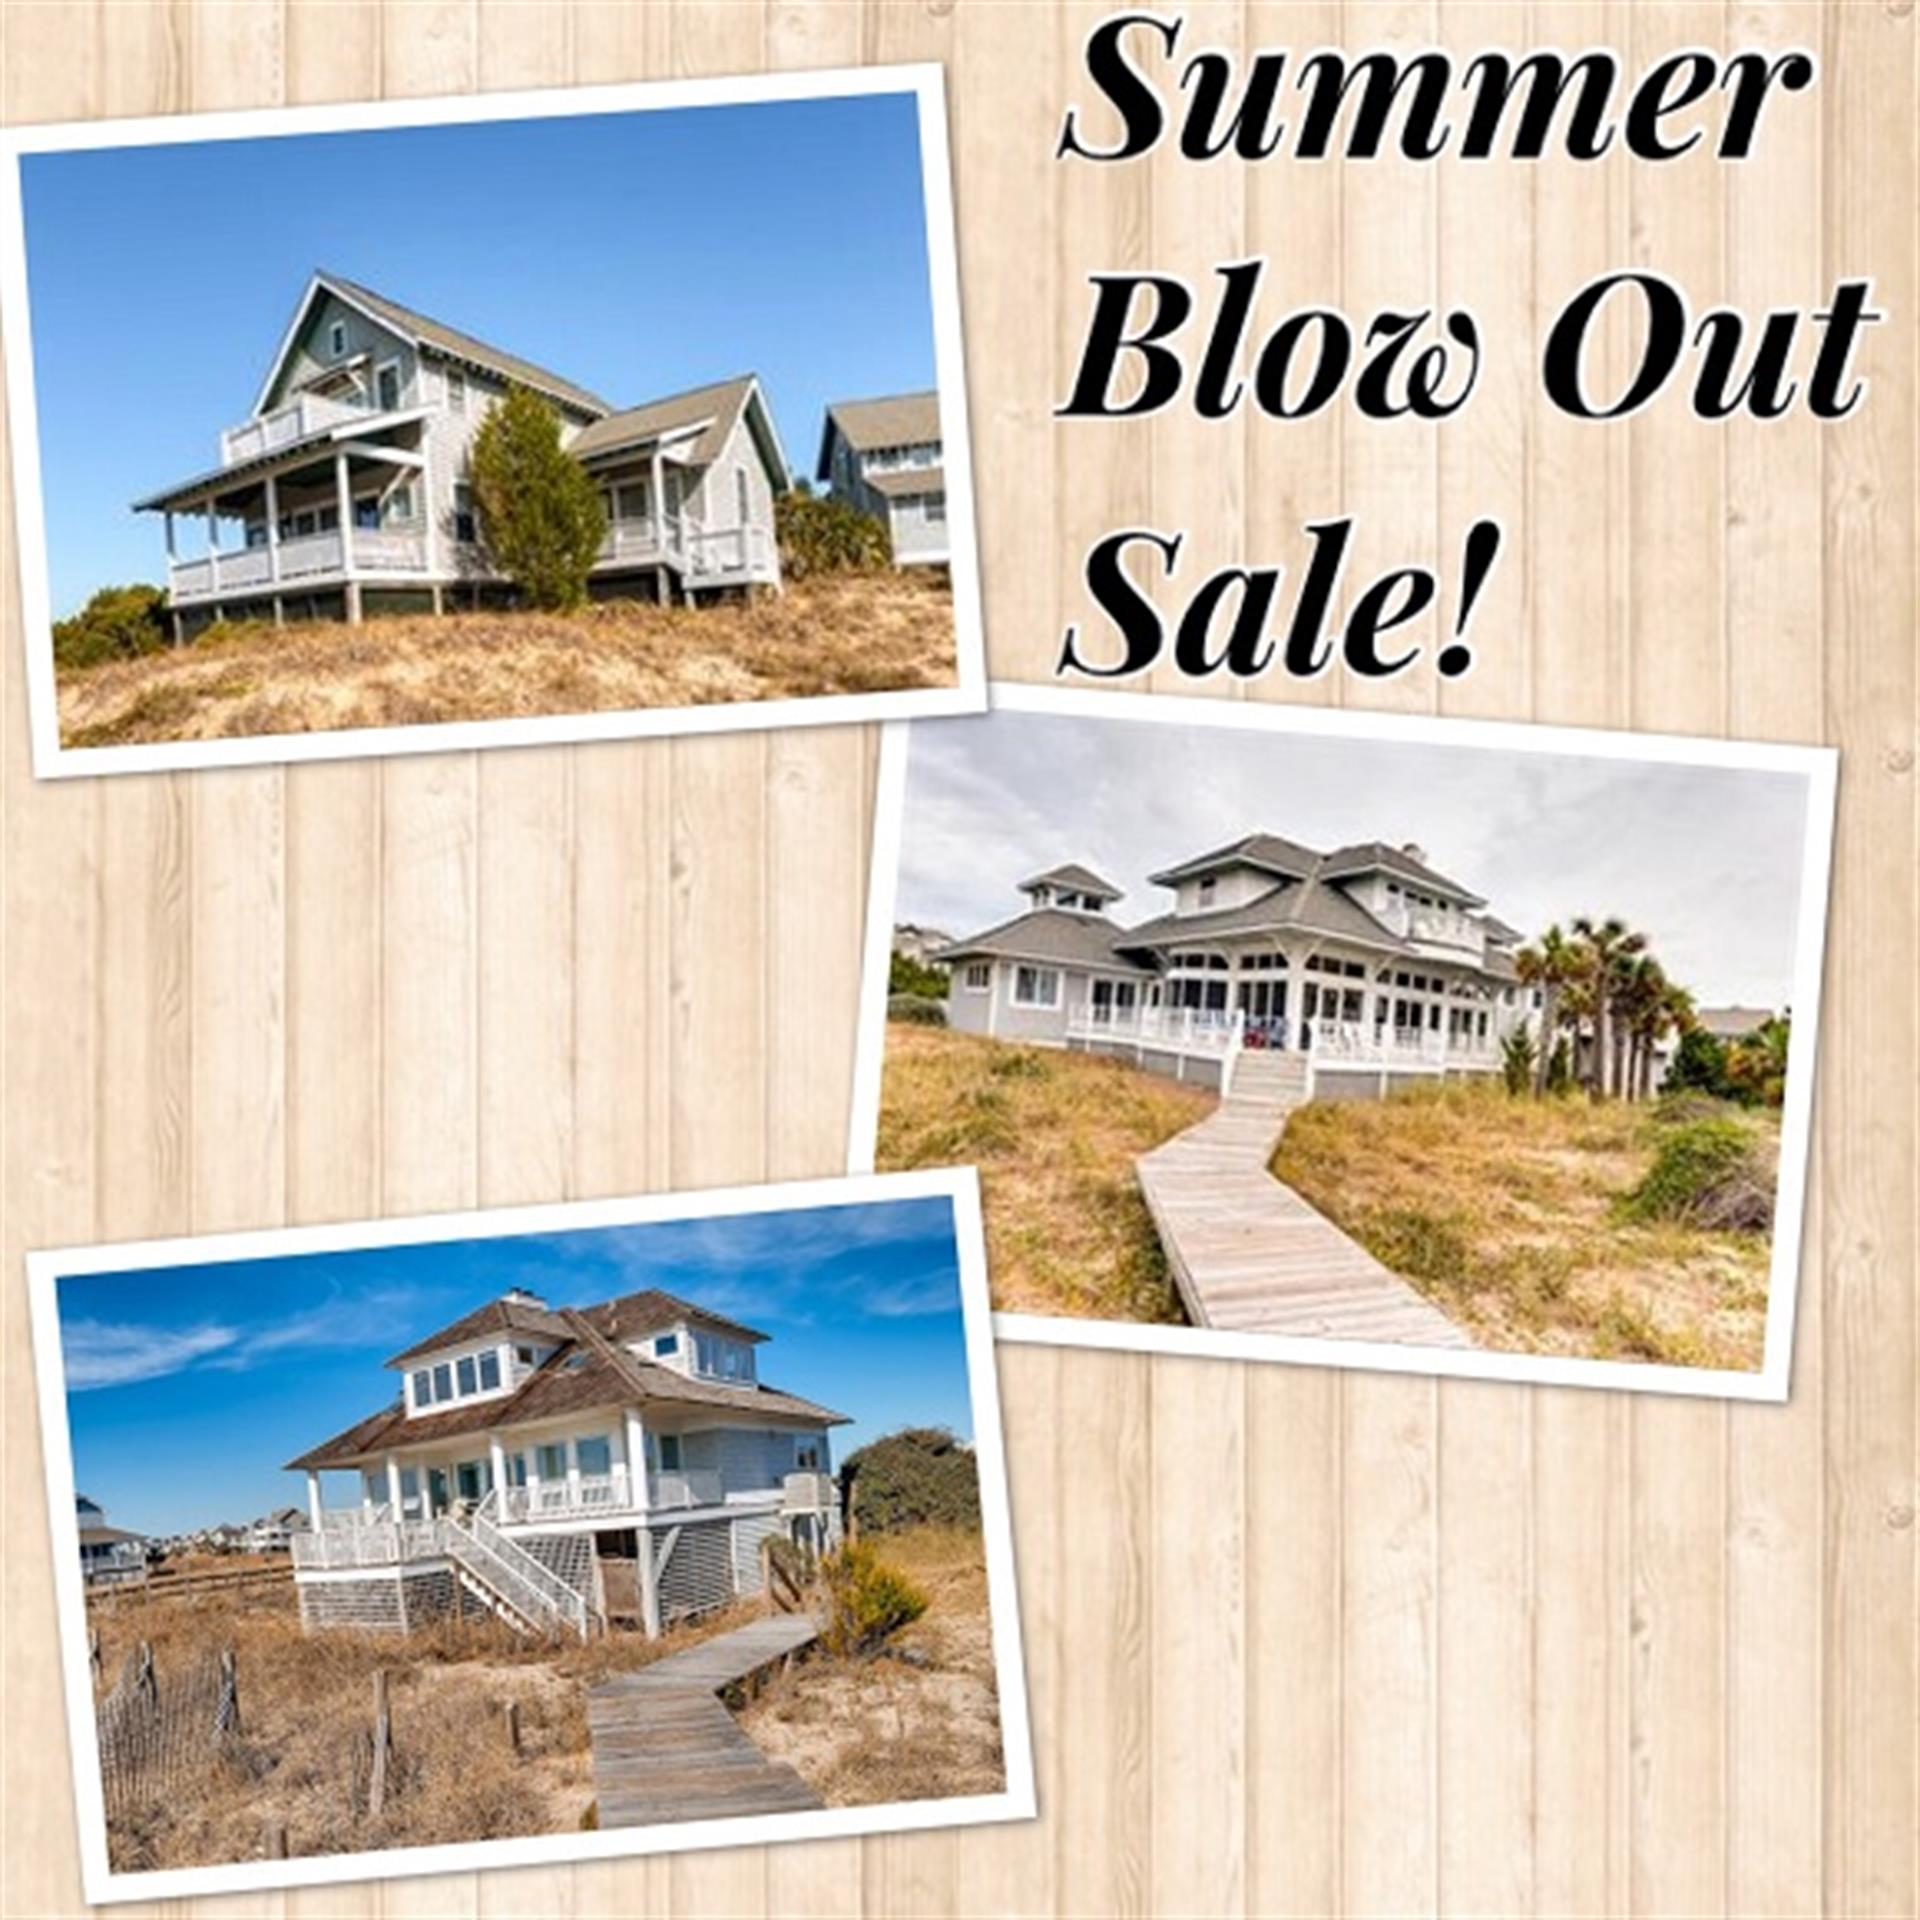 Bald Head Island Summer Blow Out Sale